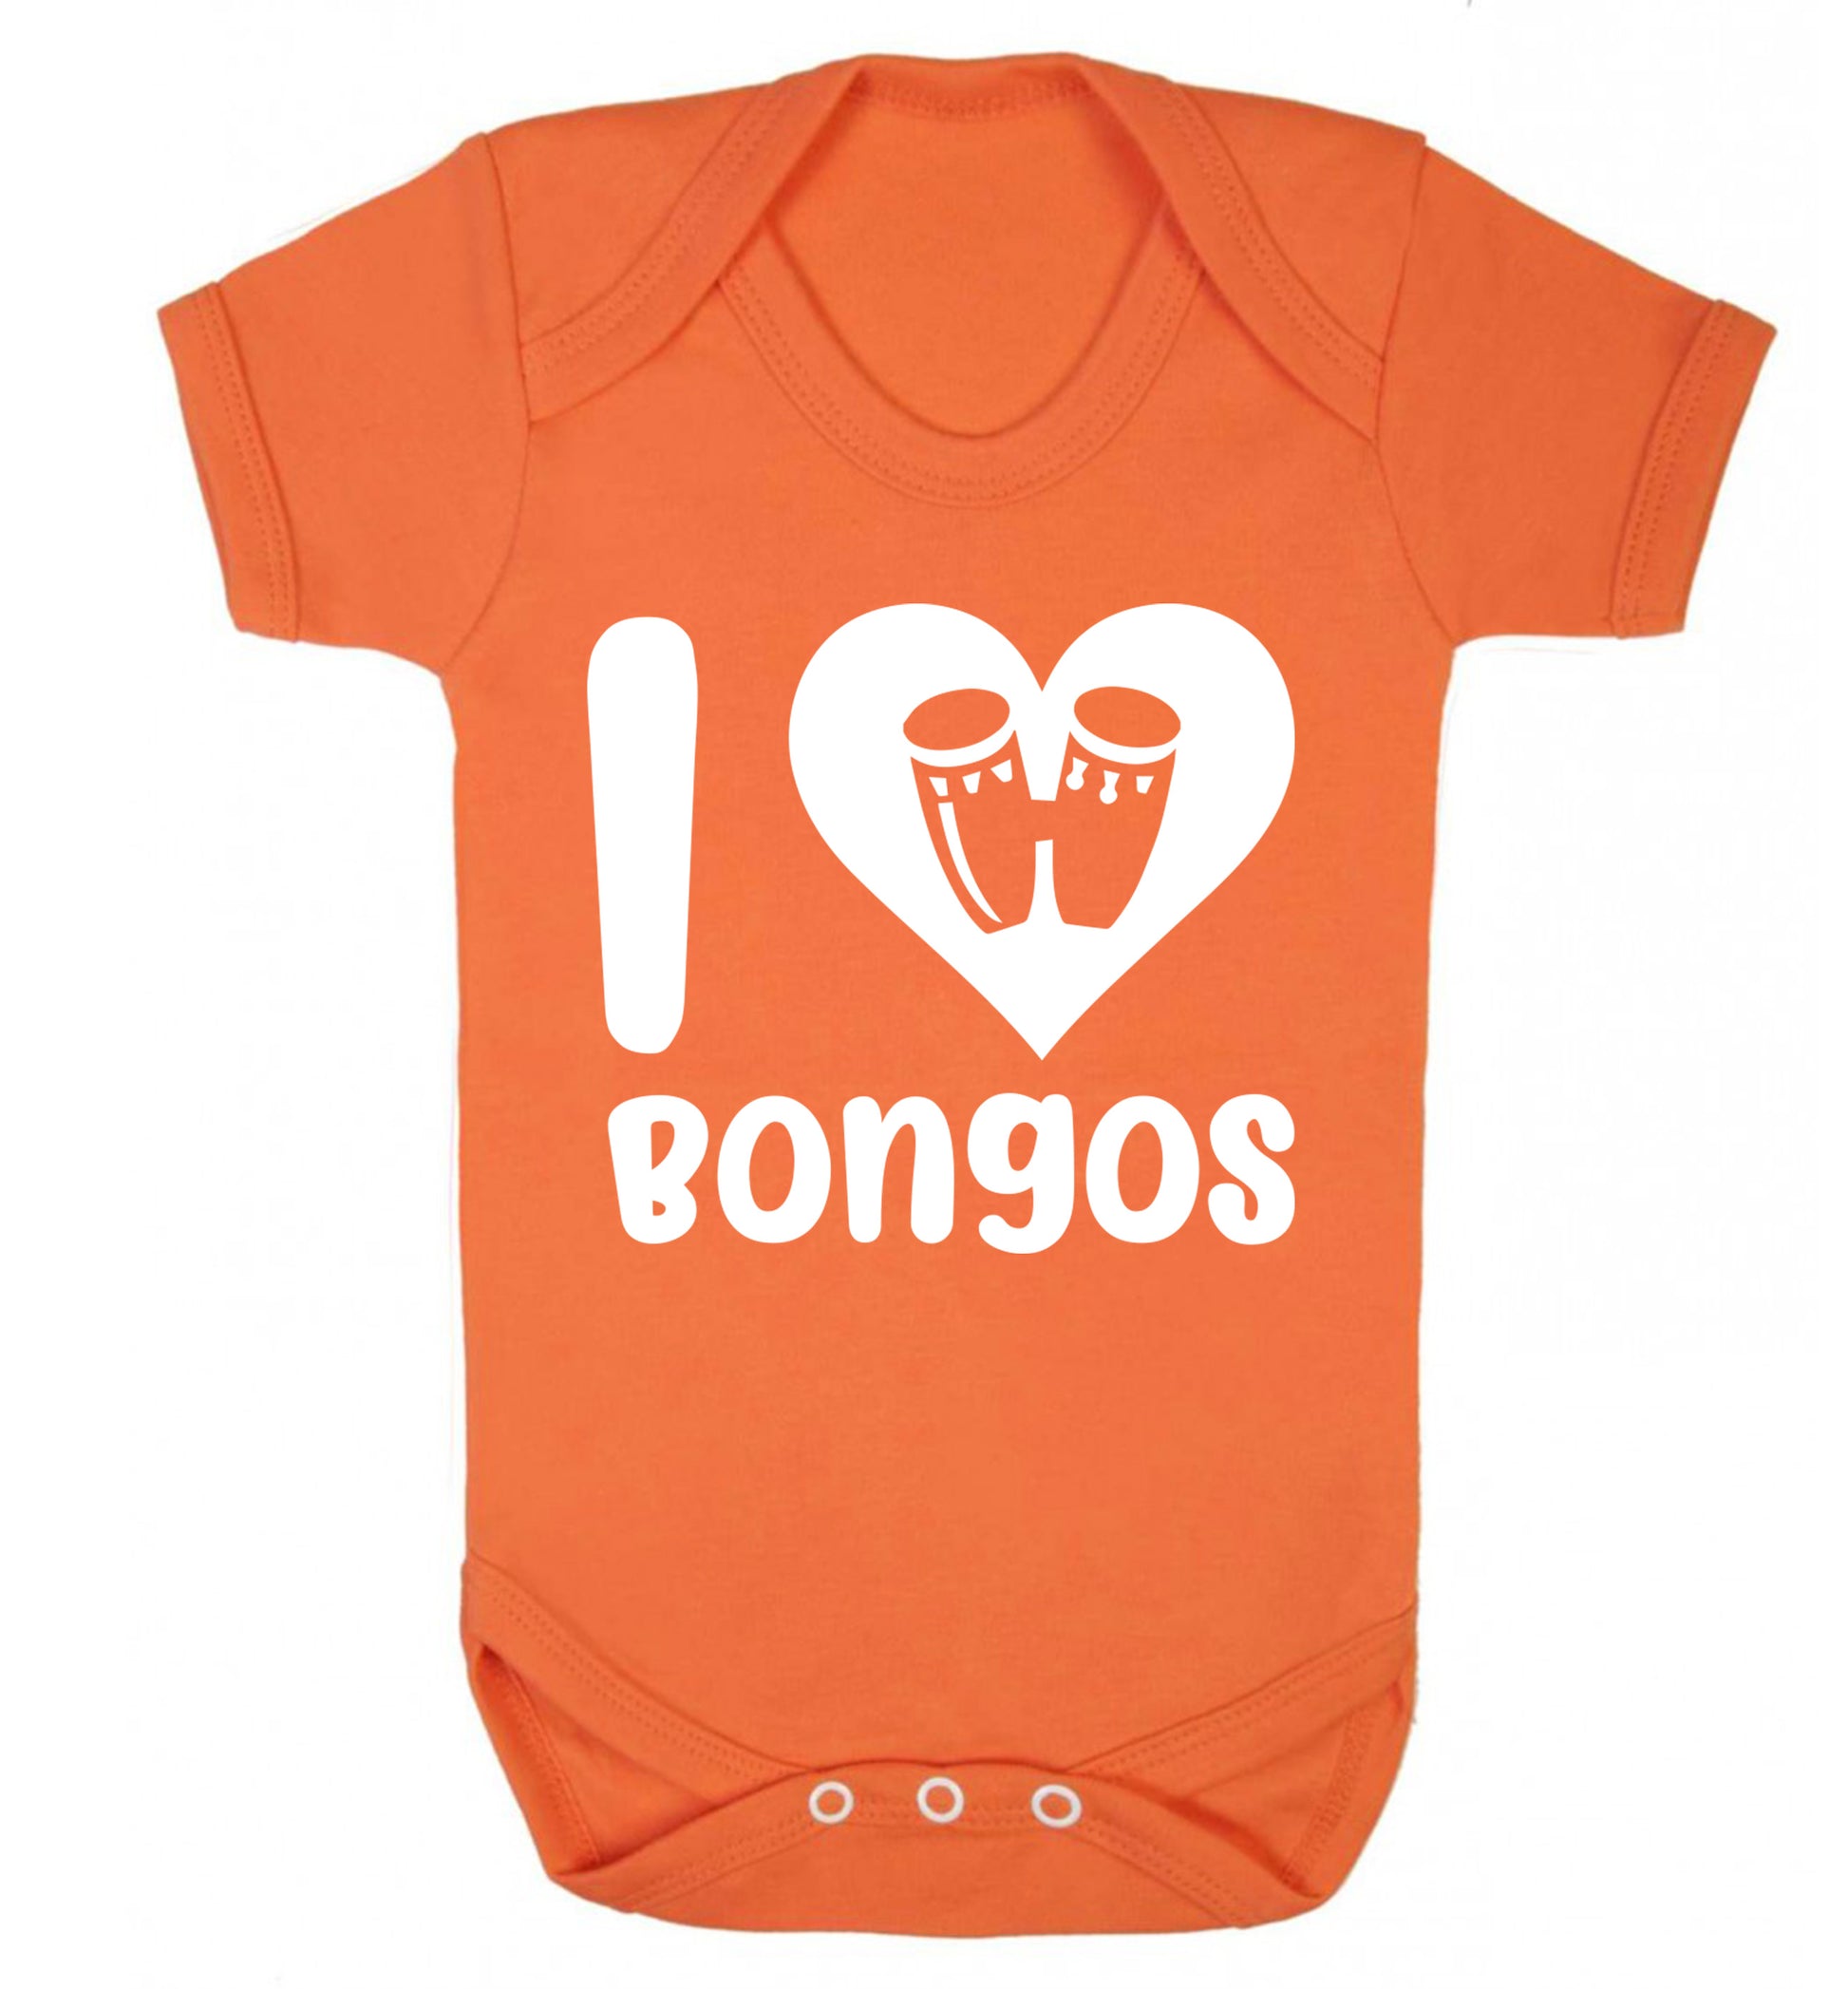 I love bongos Baby Vest orange 18-24 months